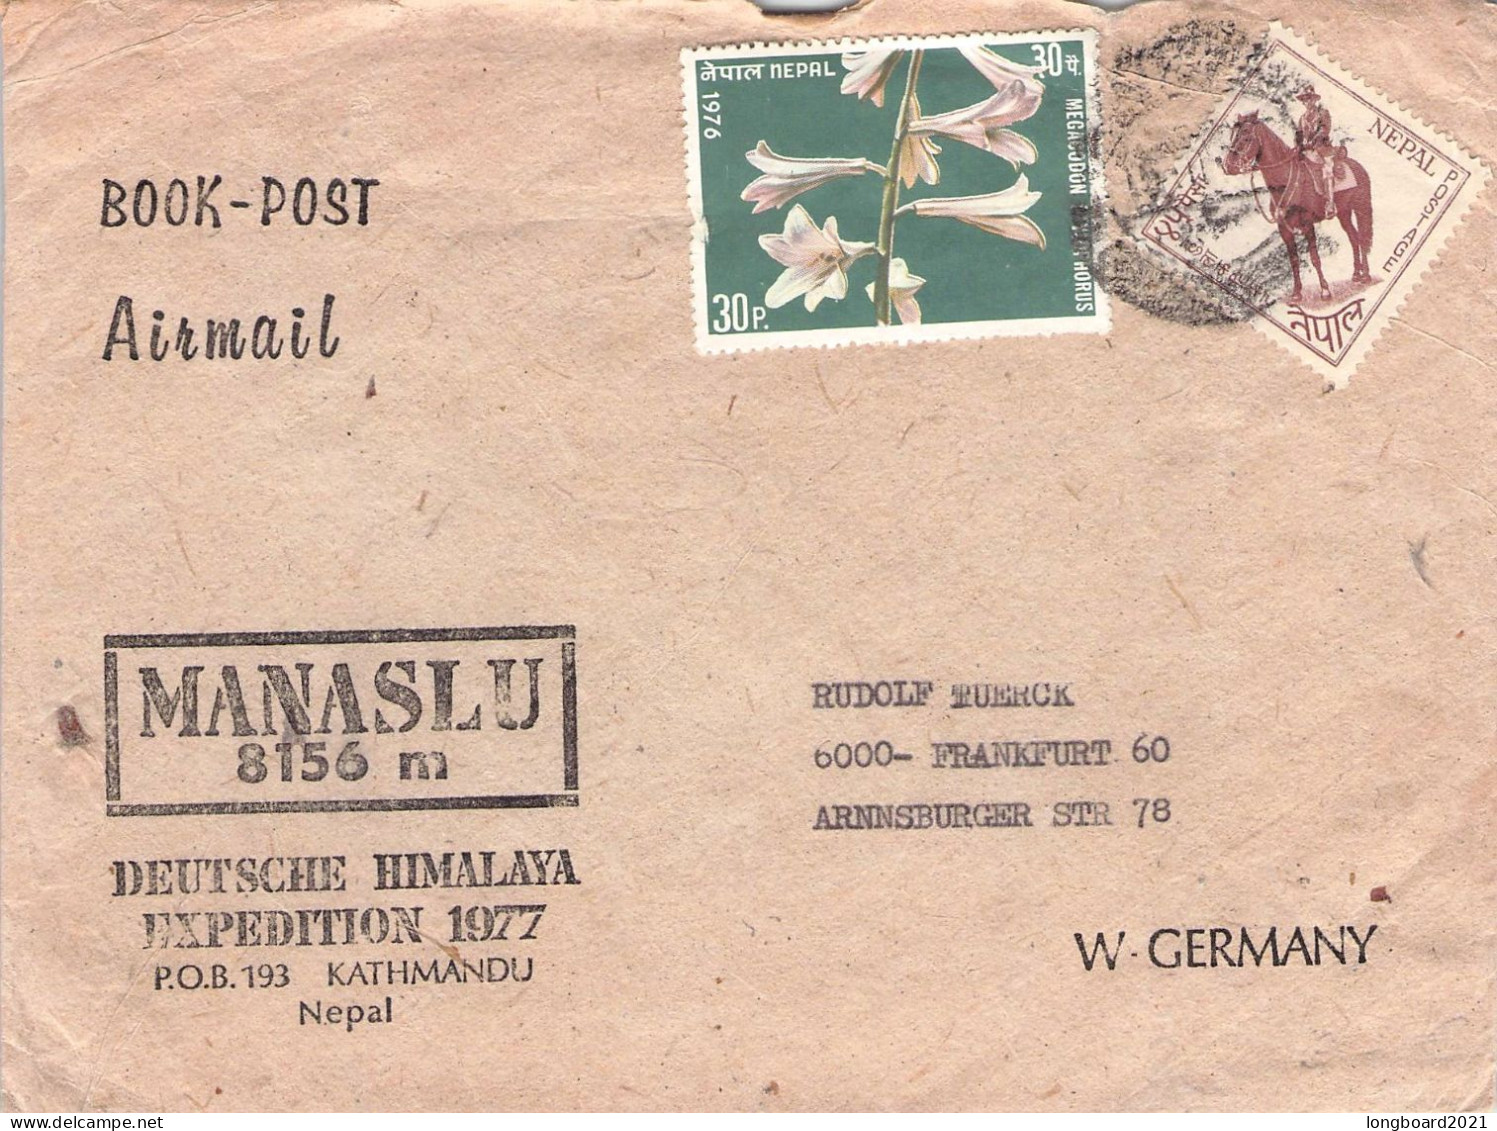 NEPAL - BOOK-POST AIRMAIL - W. GERMANY / 7039 - Nepal